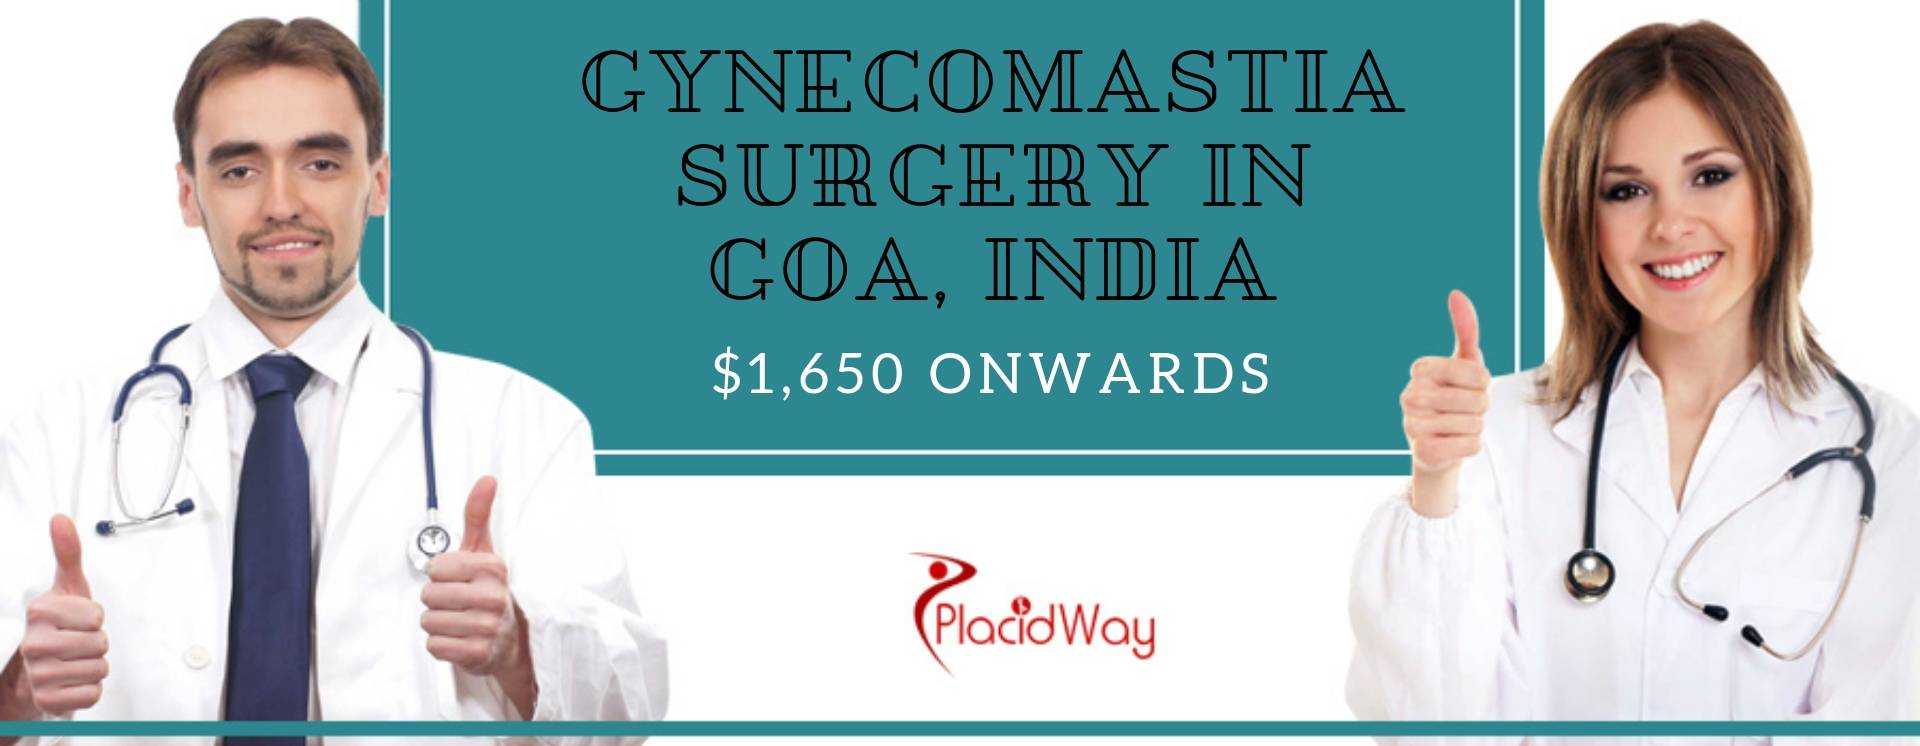 Gynecomastia Surgery in Goa, India